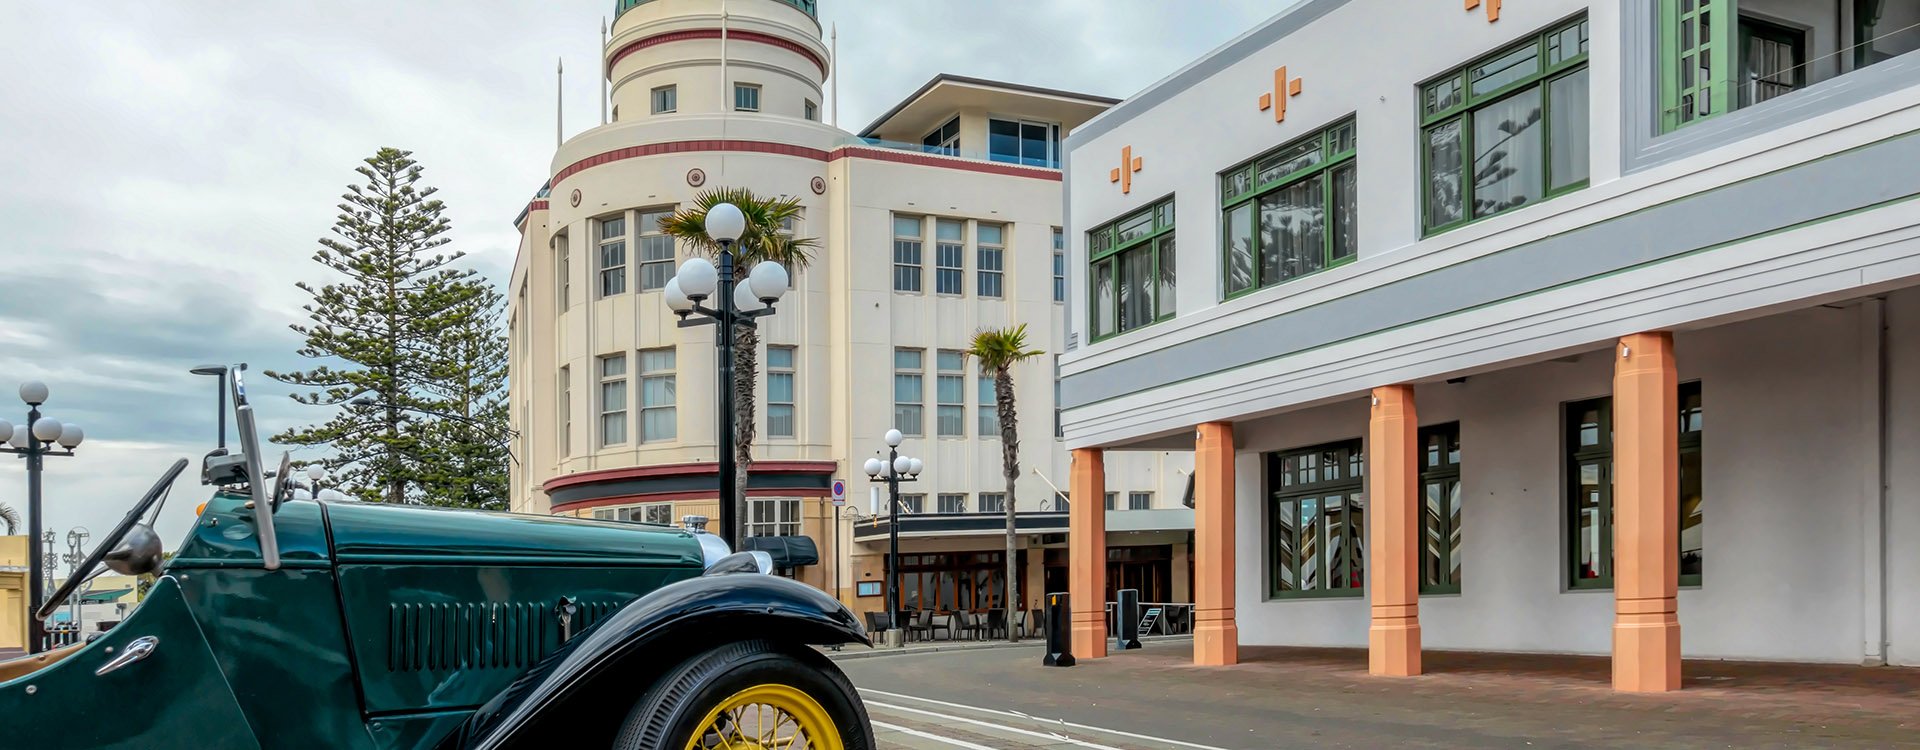 Napier, New Zealand Major Symbols - A Vintage Car and The Dome Building